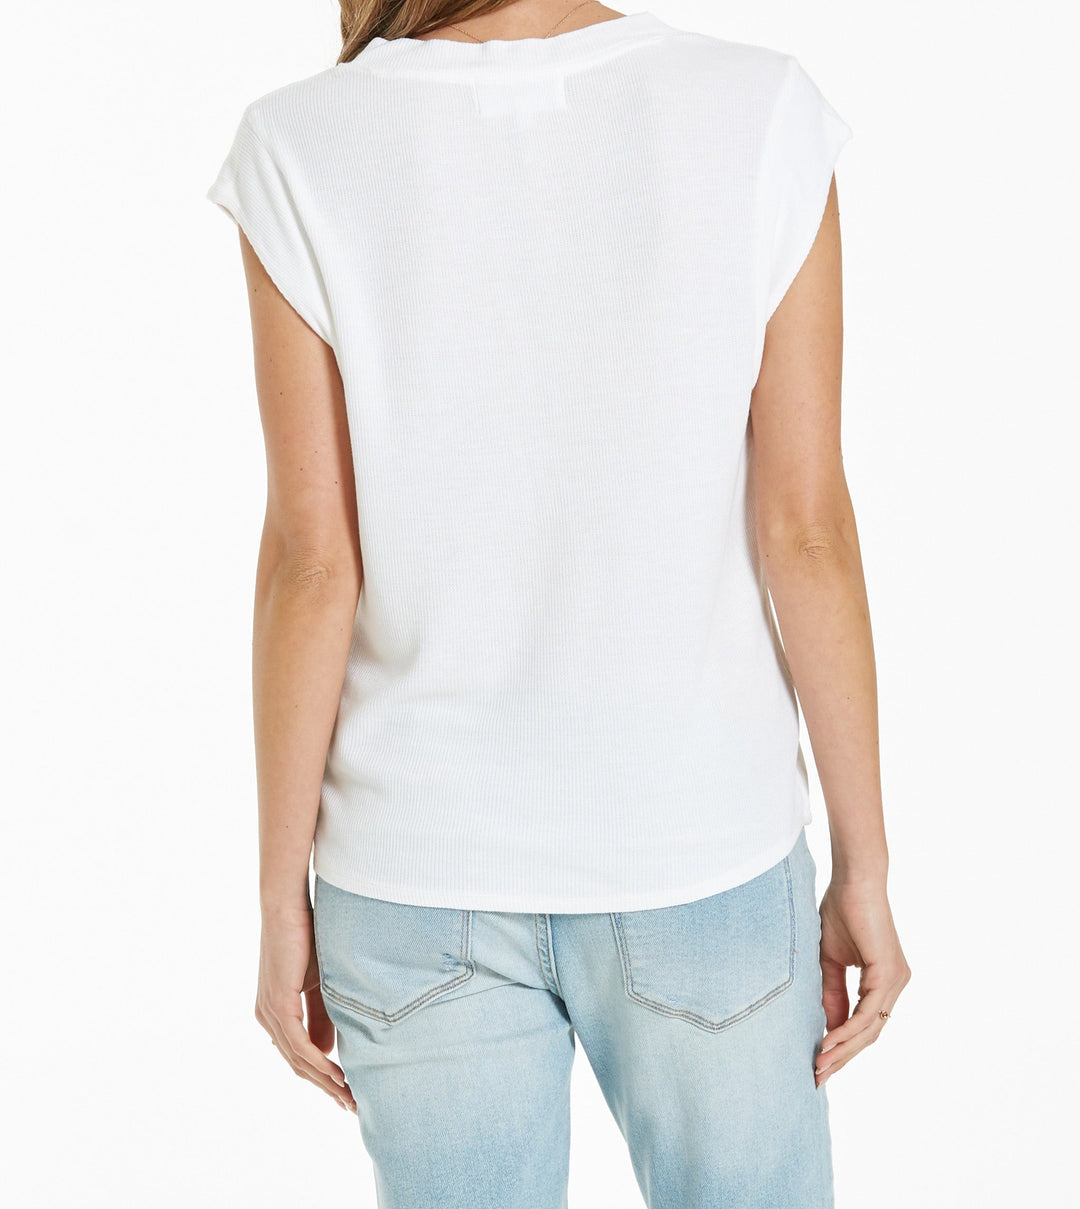 image of a female model wearing a URI THERMAL V-NECK TOP WHITE DEAR JOHN DENIM 